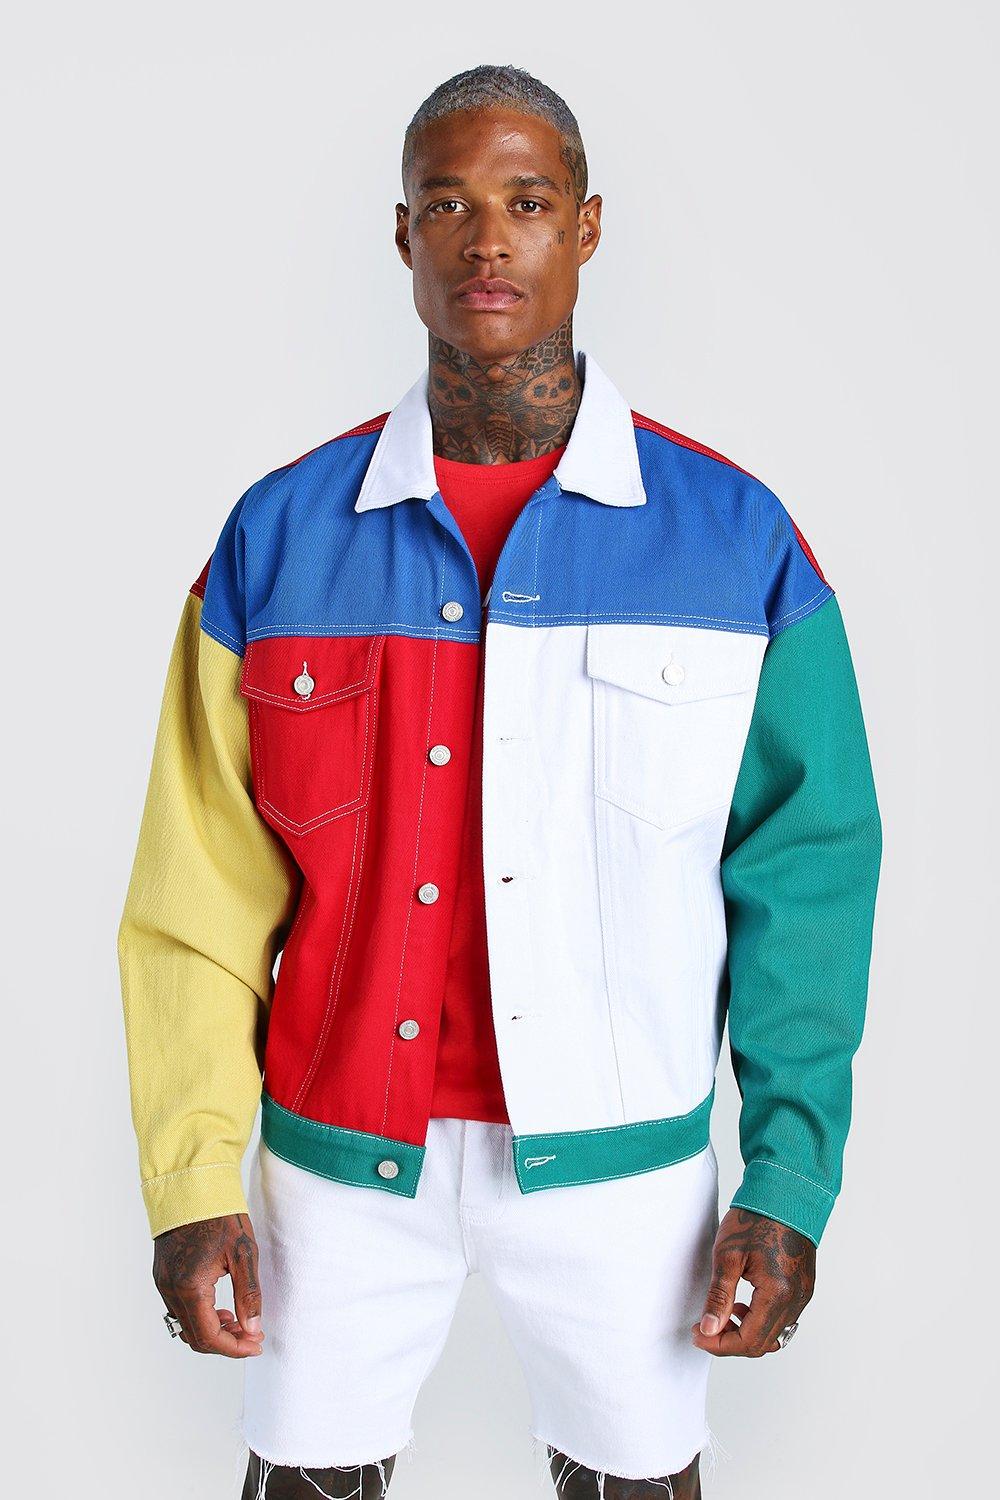 multi colored jean jacket